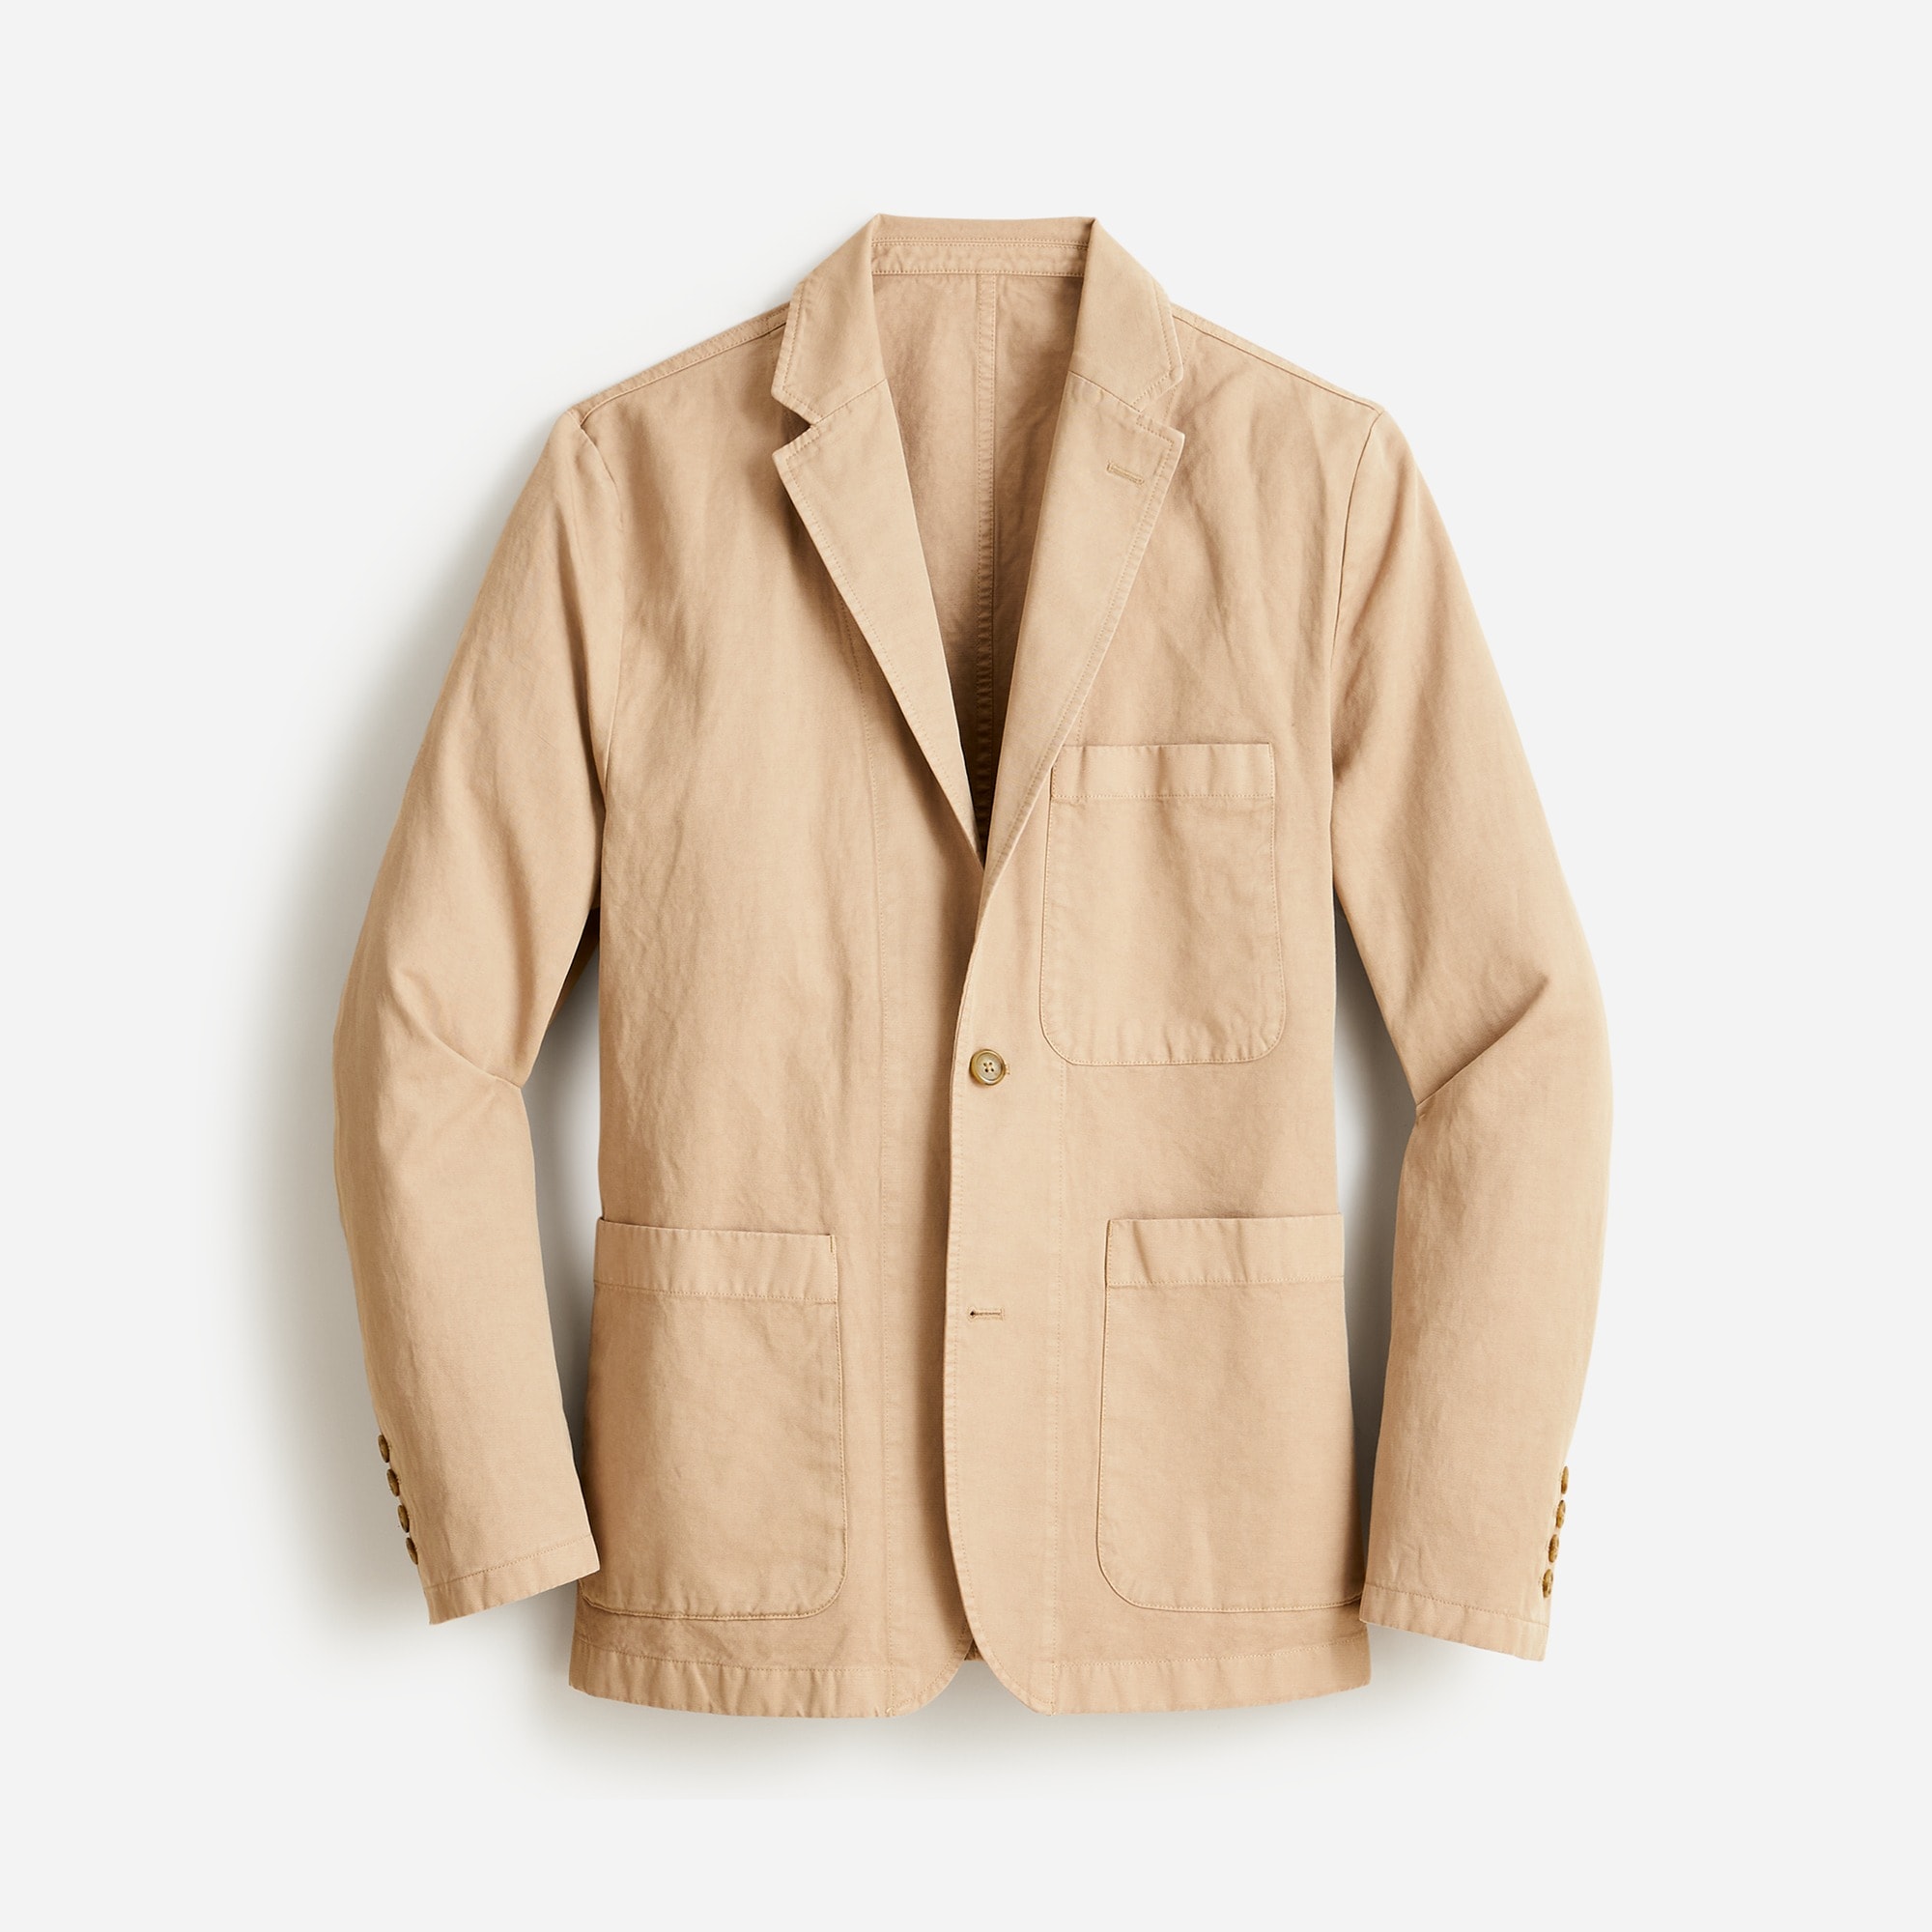  Garment-dyed cotton-linen blend chino suit jacket